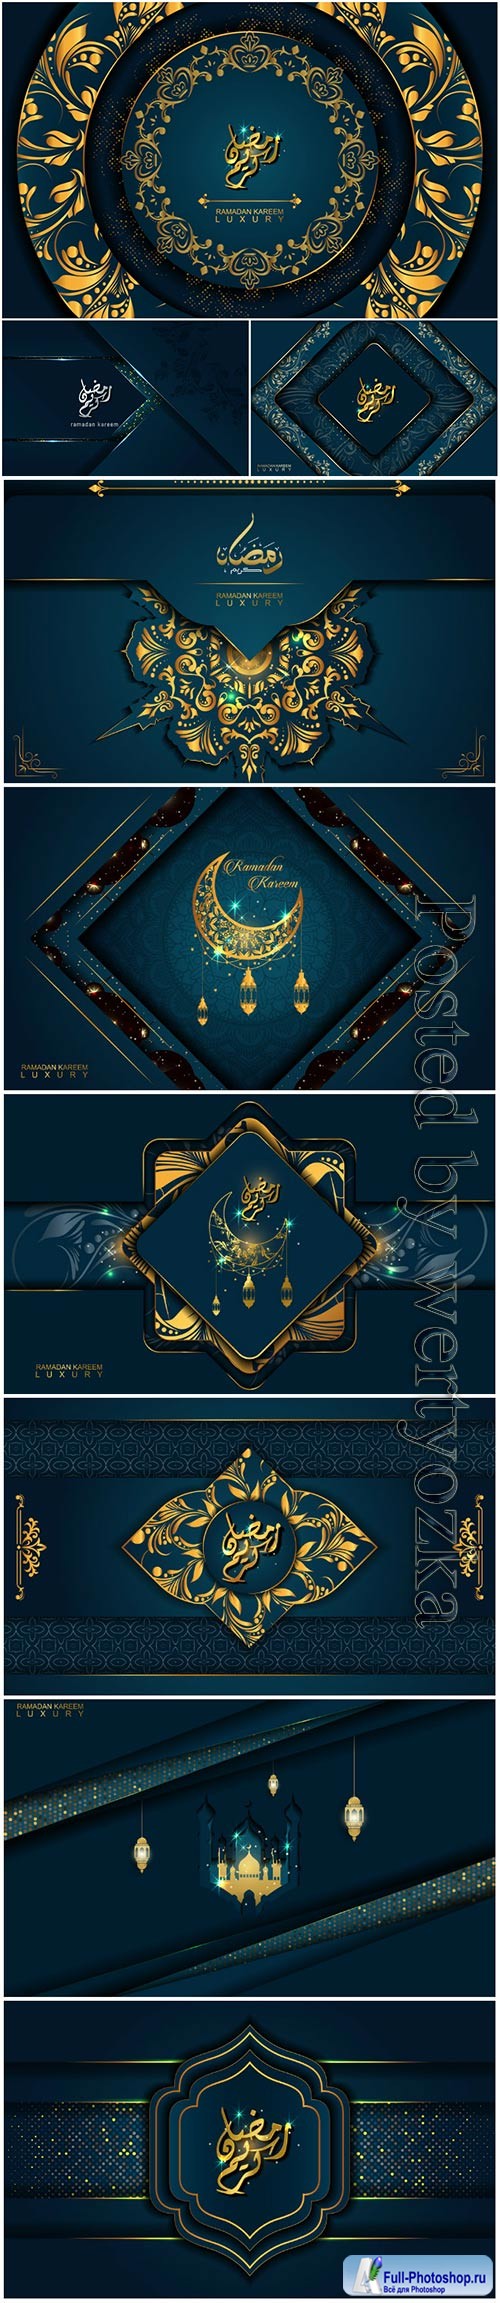 Ramadan Kareem in luxury style with Arabic calligraphy